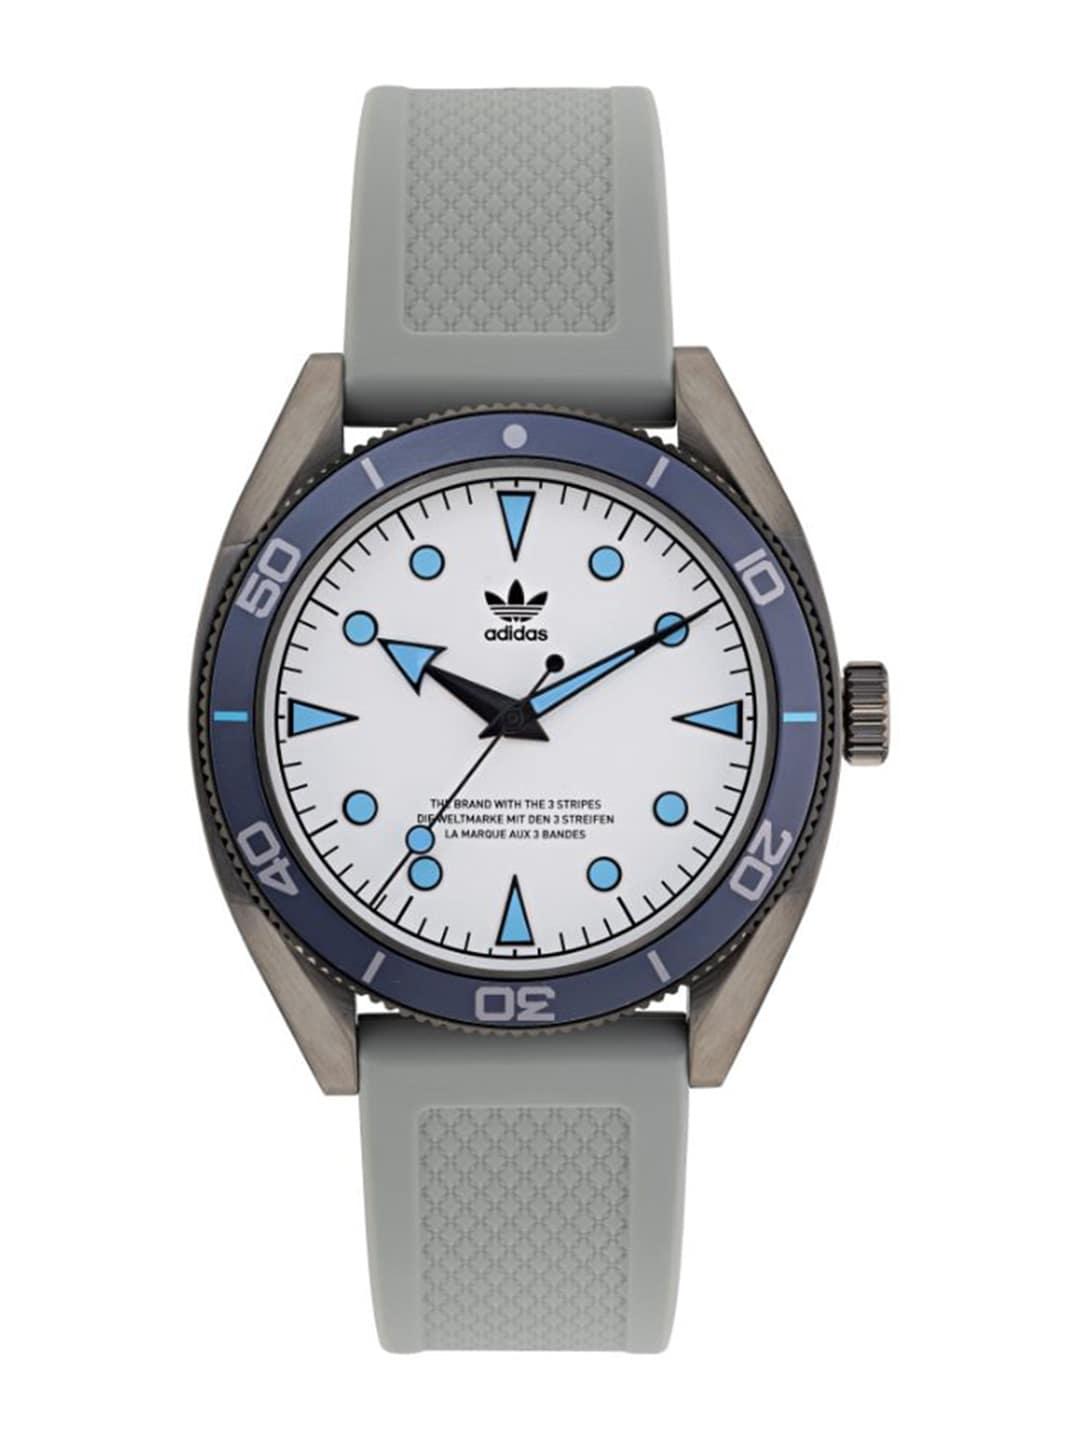 adidas originals men printed dial & straps analogue watch aofh22003